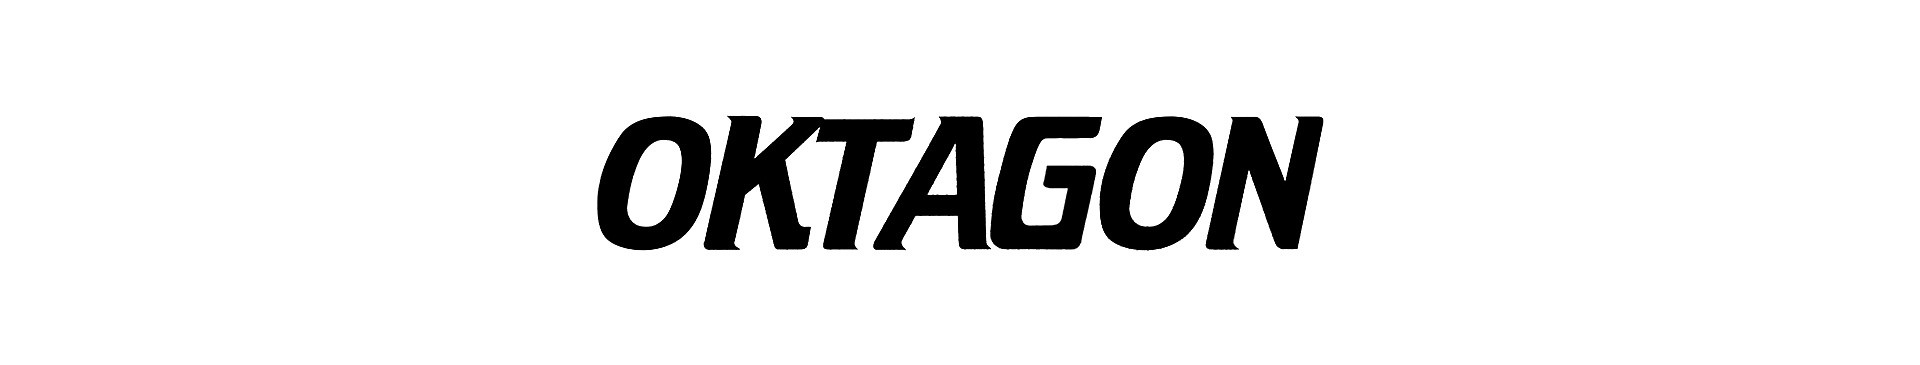 2020_04_sponsor_Oktagon_logo.jpg